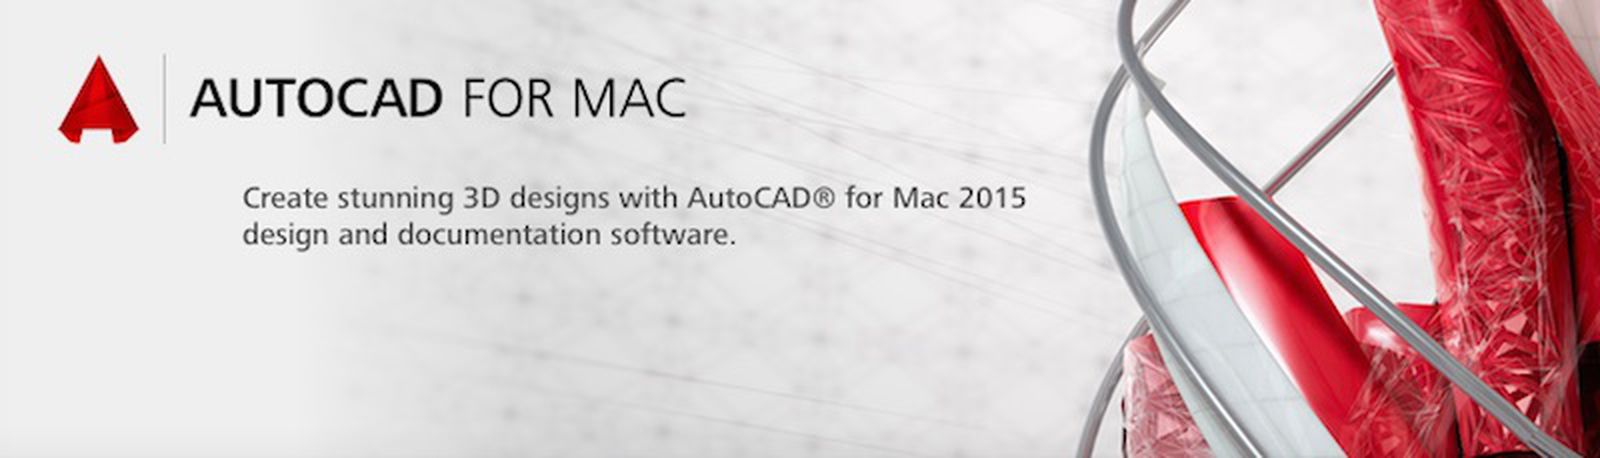 autocad for mac latest version